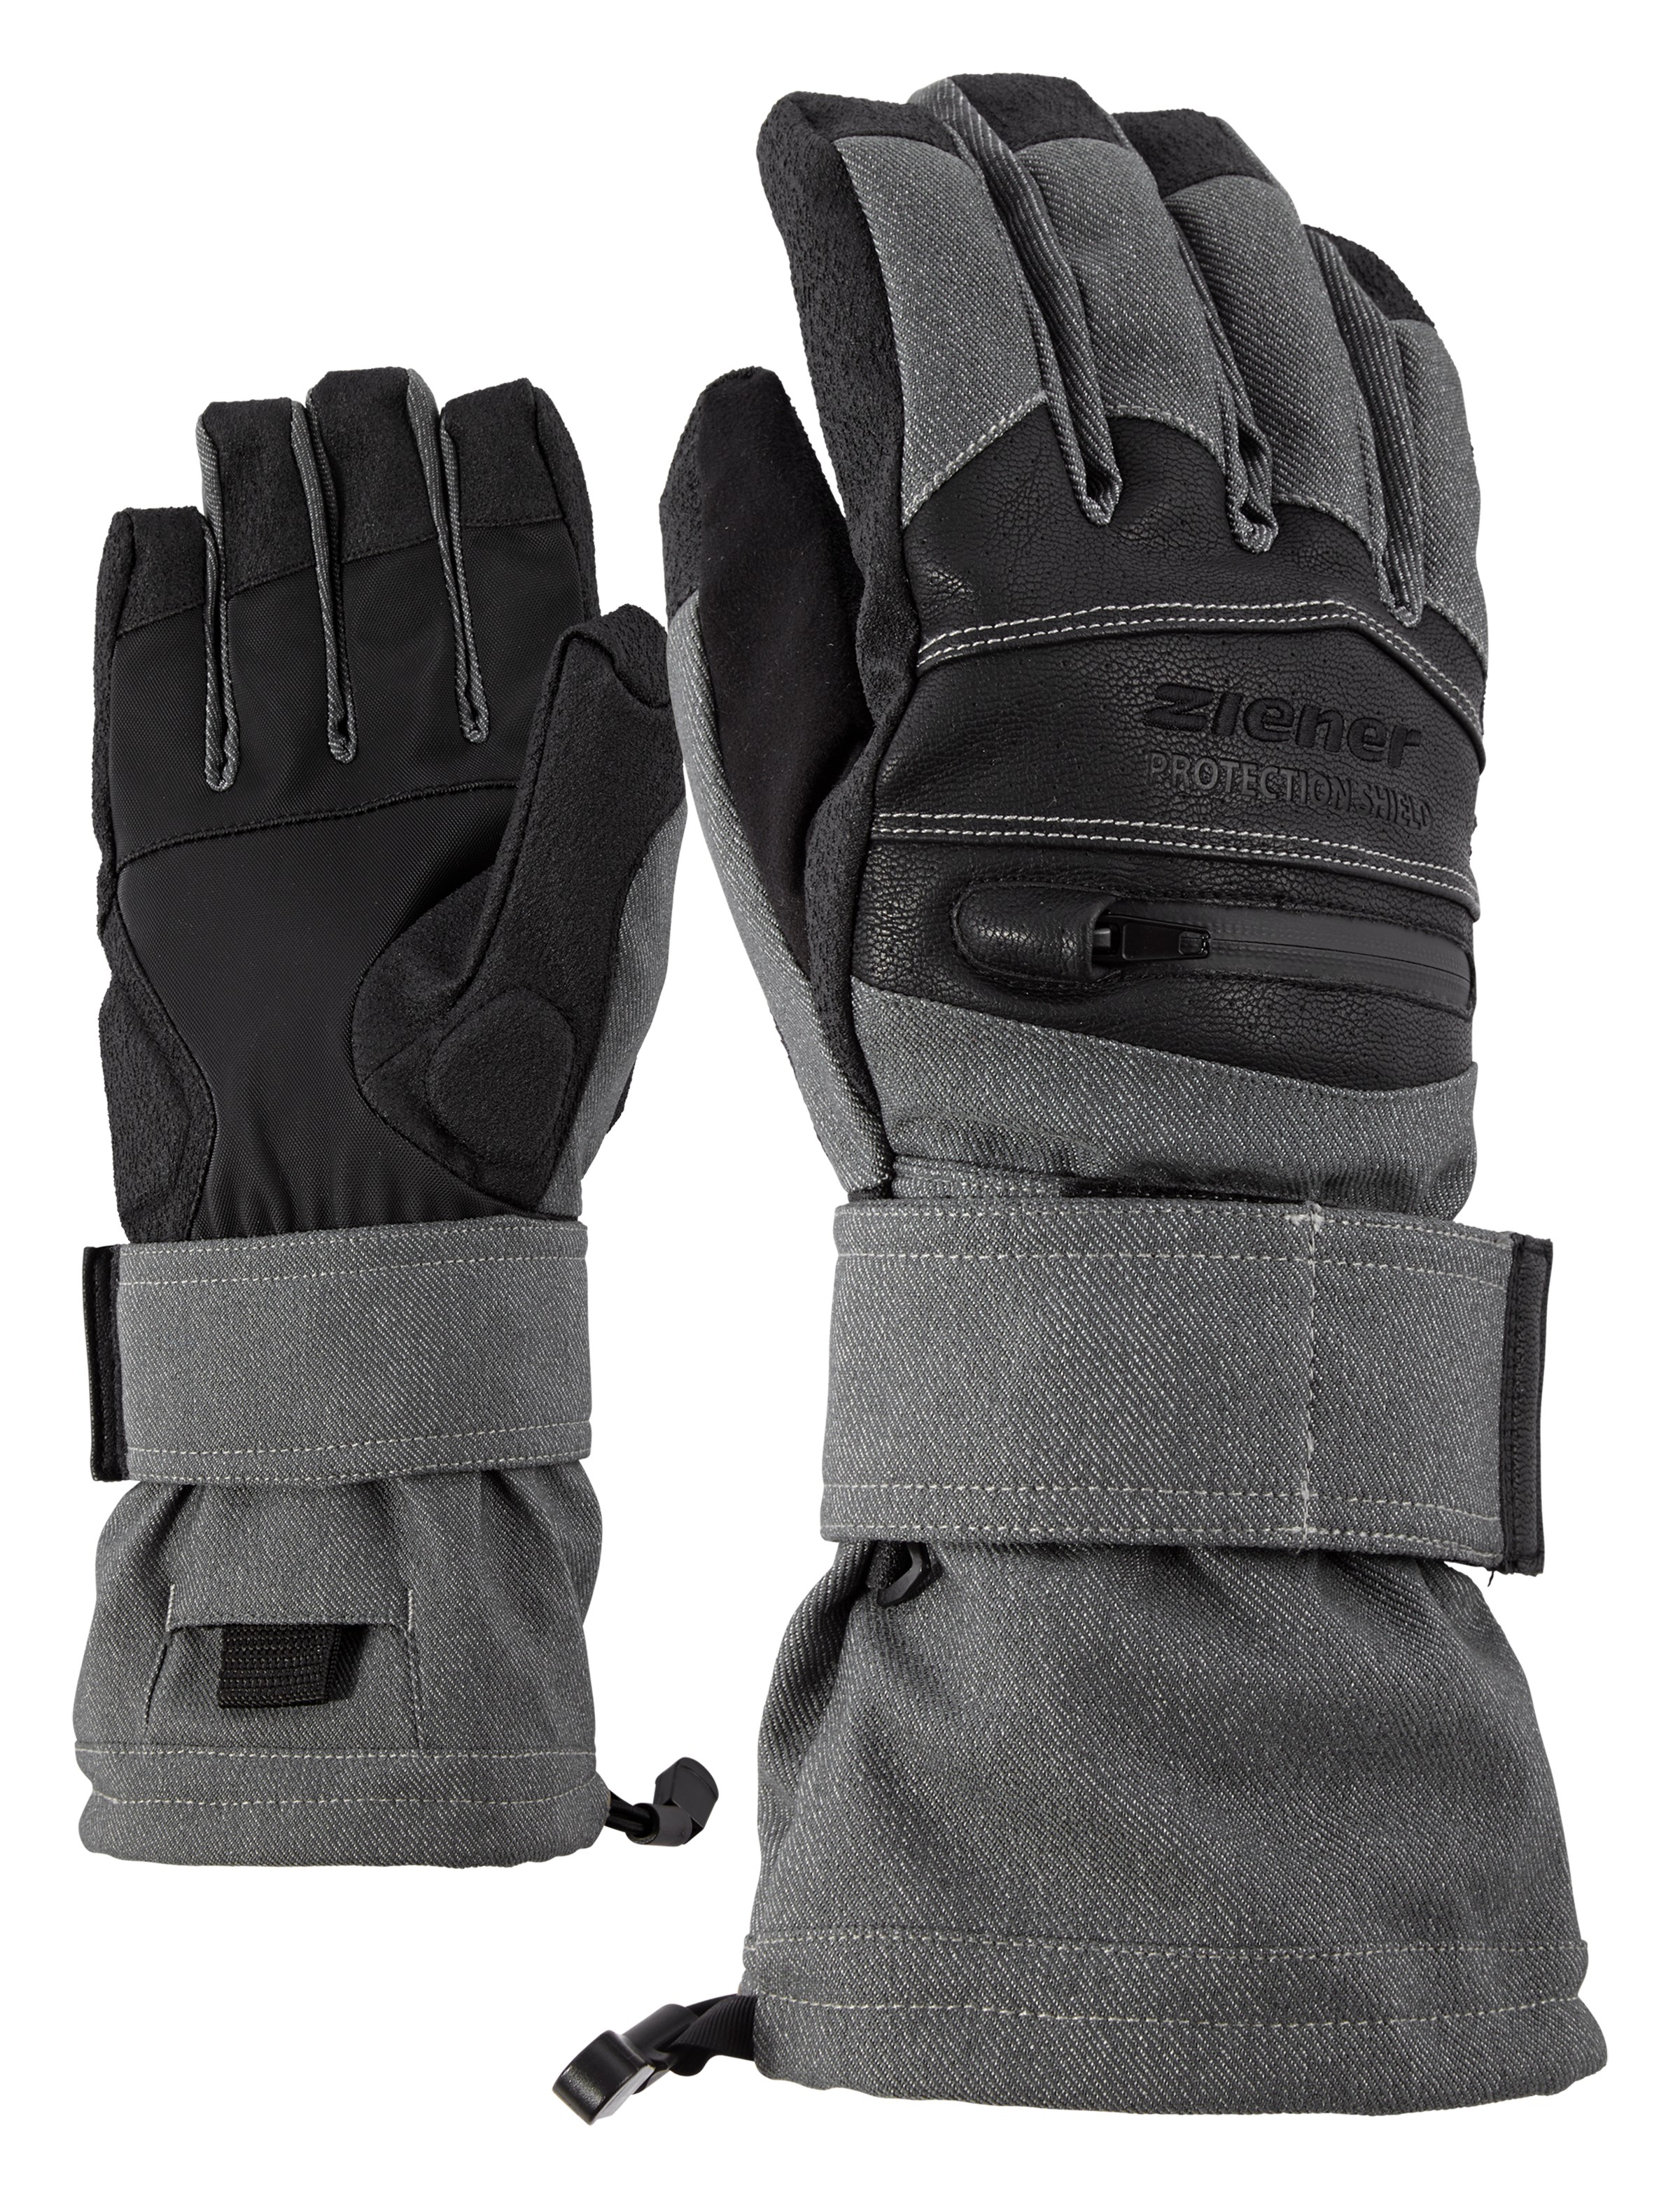 Midlife 17/18 AS(R) Glove denim Ziener -grey